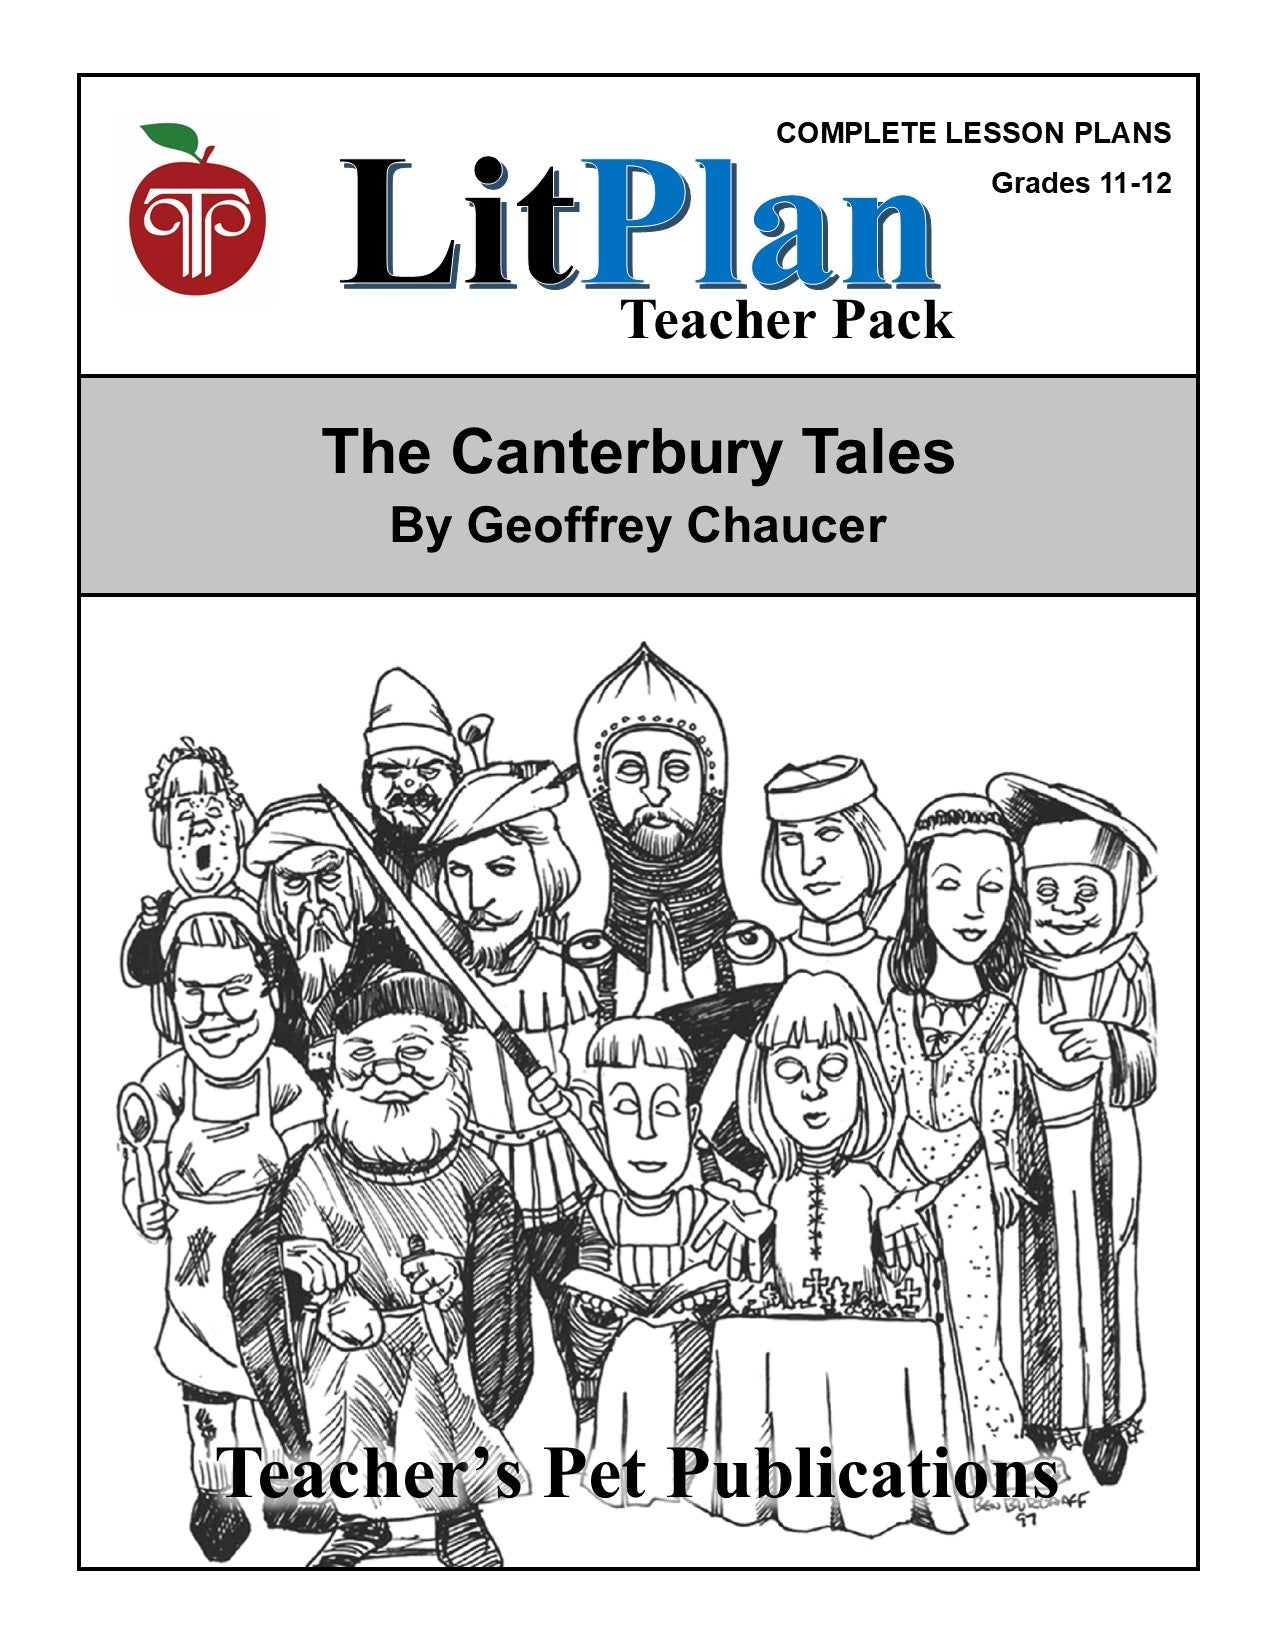 The Canterbury Tales: LitPlan Teacher Pack Grades 11-12